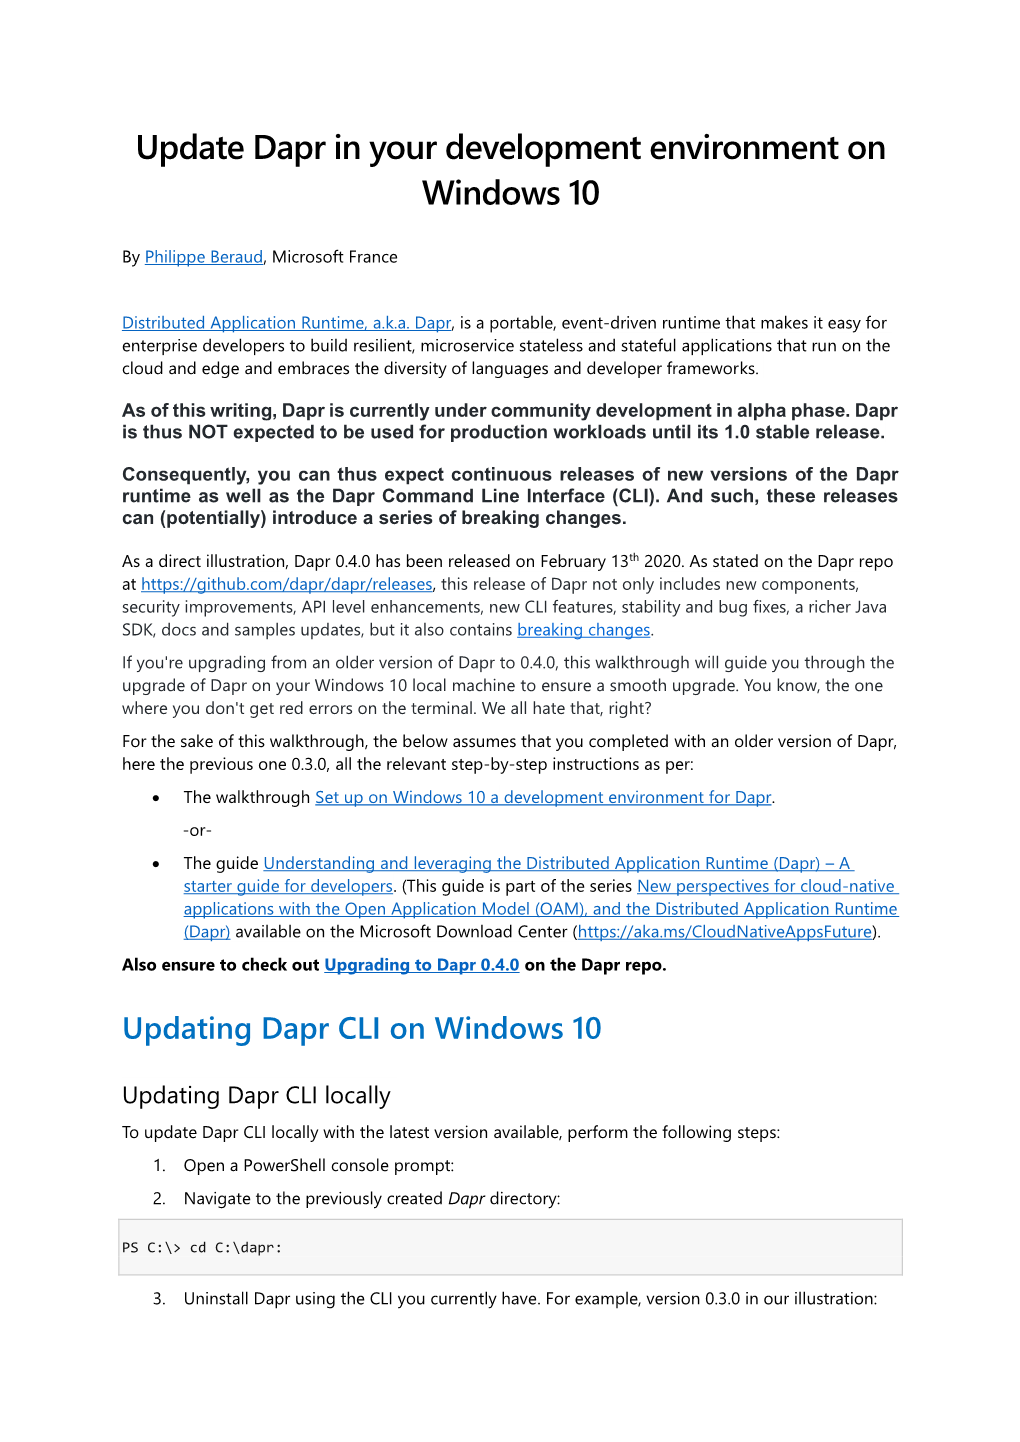 Update Dapr in Your Development Environment on Windows 10